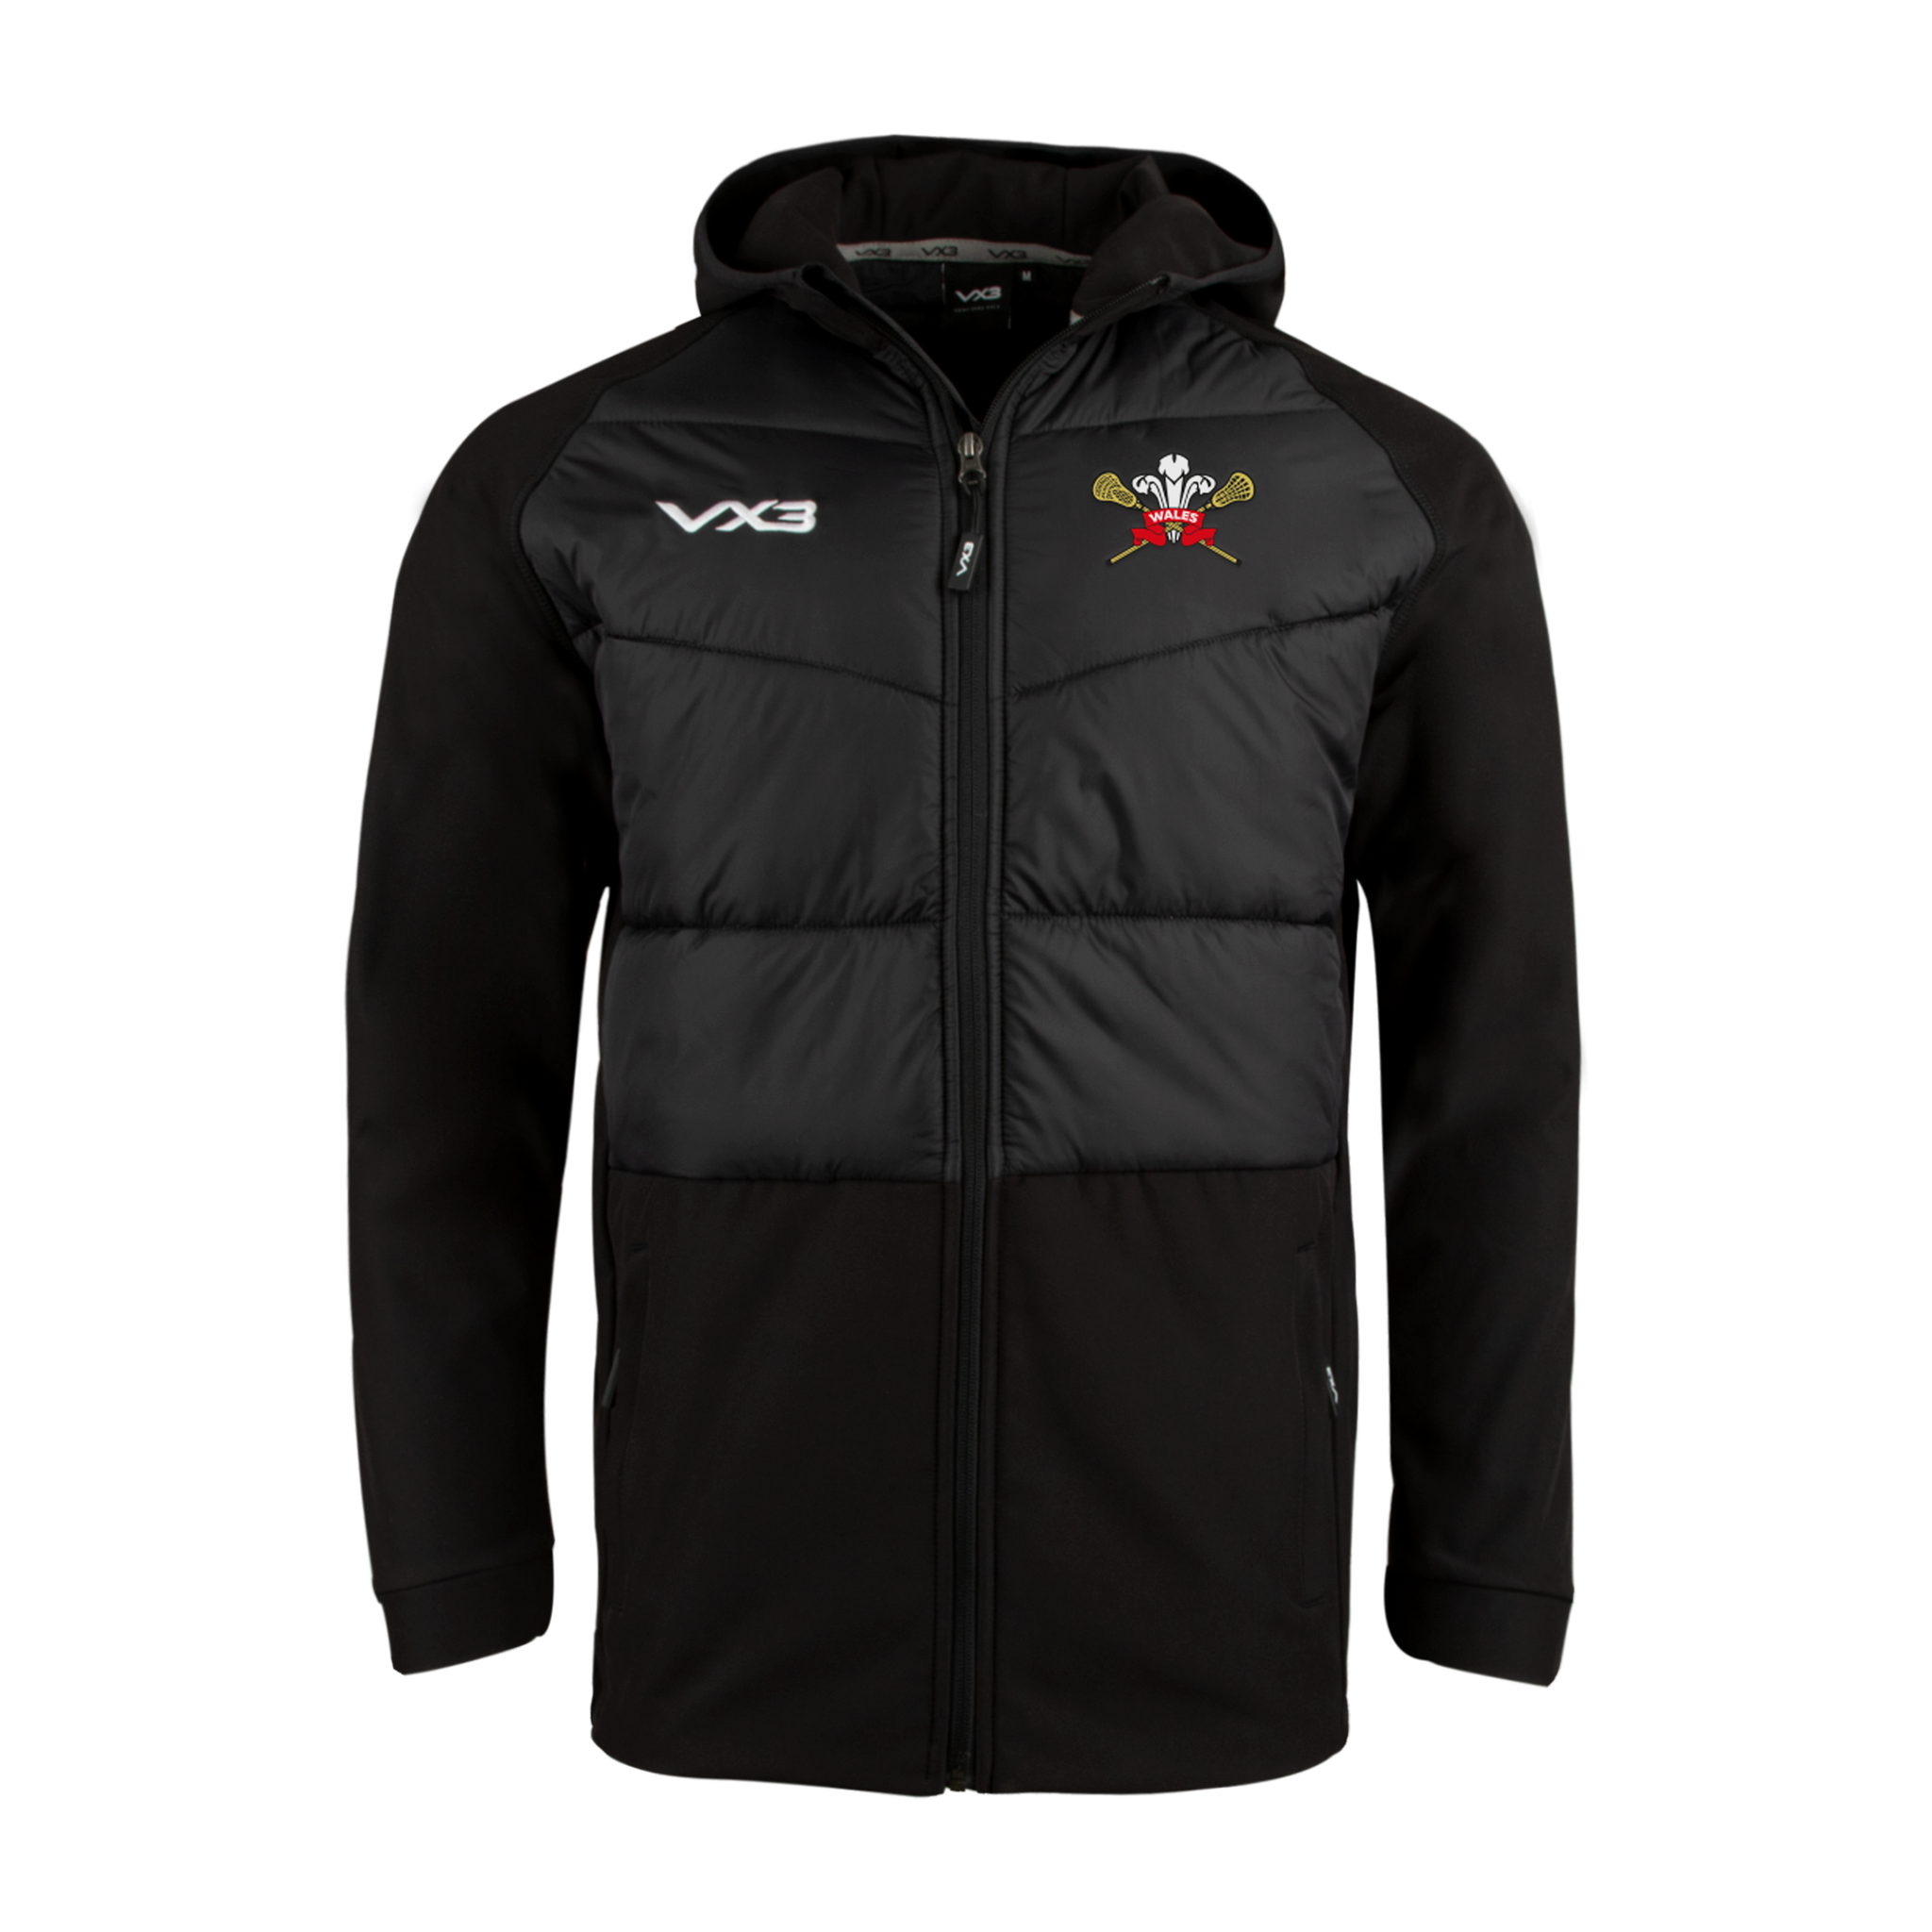 Wales Lacrosse Tempest Hybrid Jacket